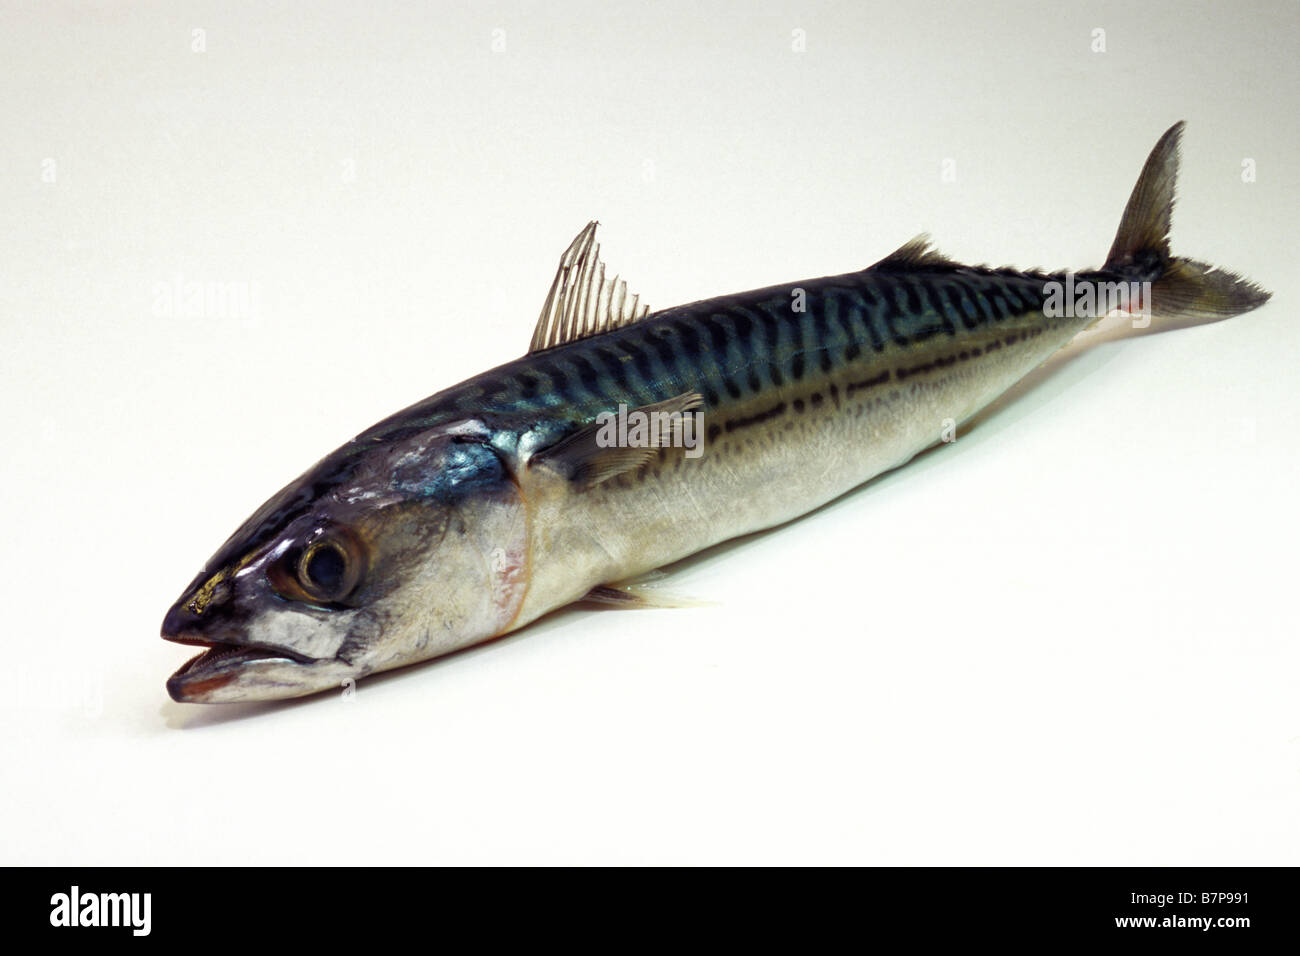 Atlantic Mackerel, Common Mackerel (Scomber scombrus), single individual, studio picture Stock Photo